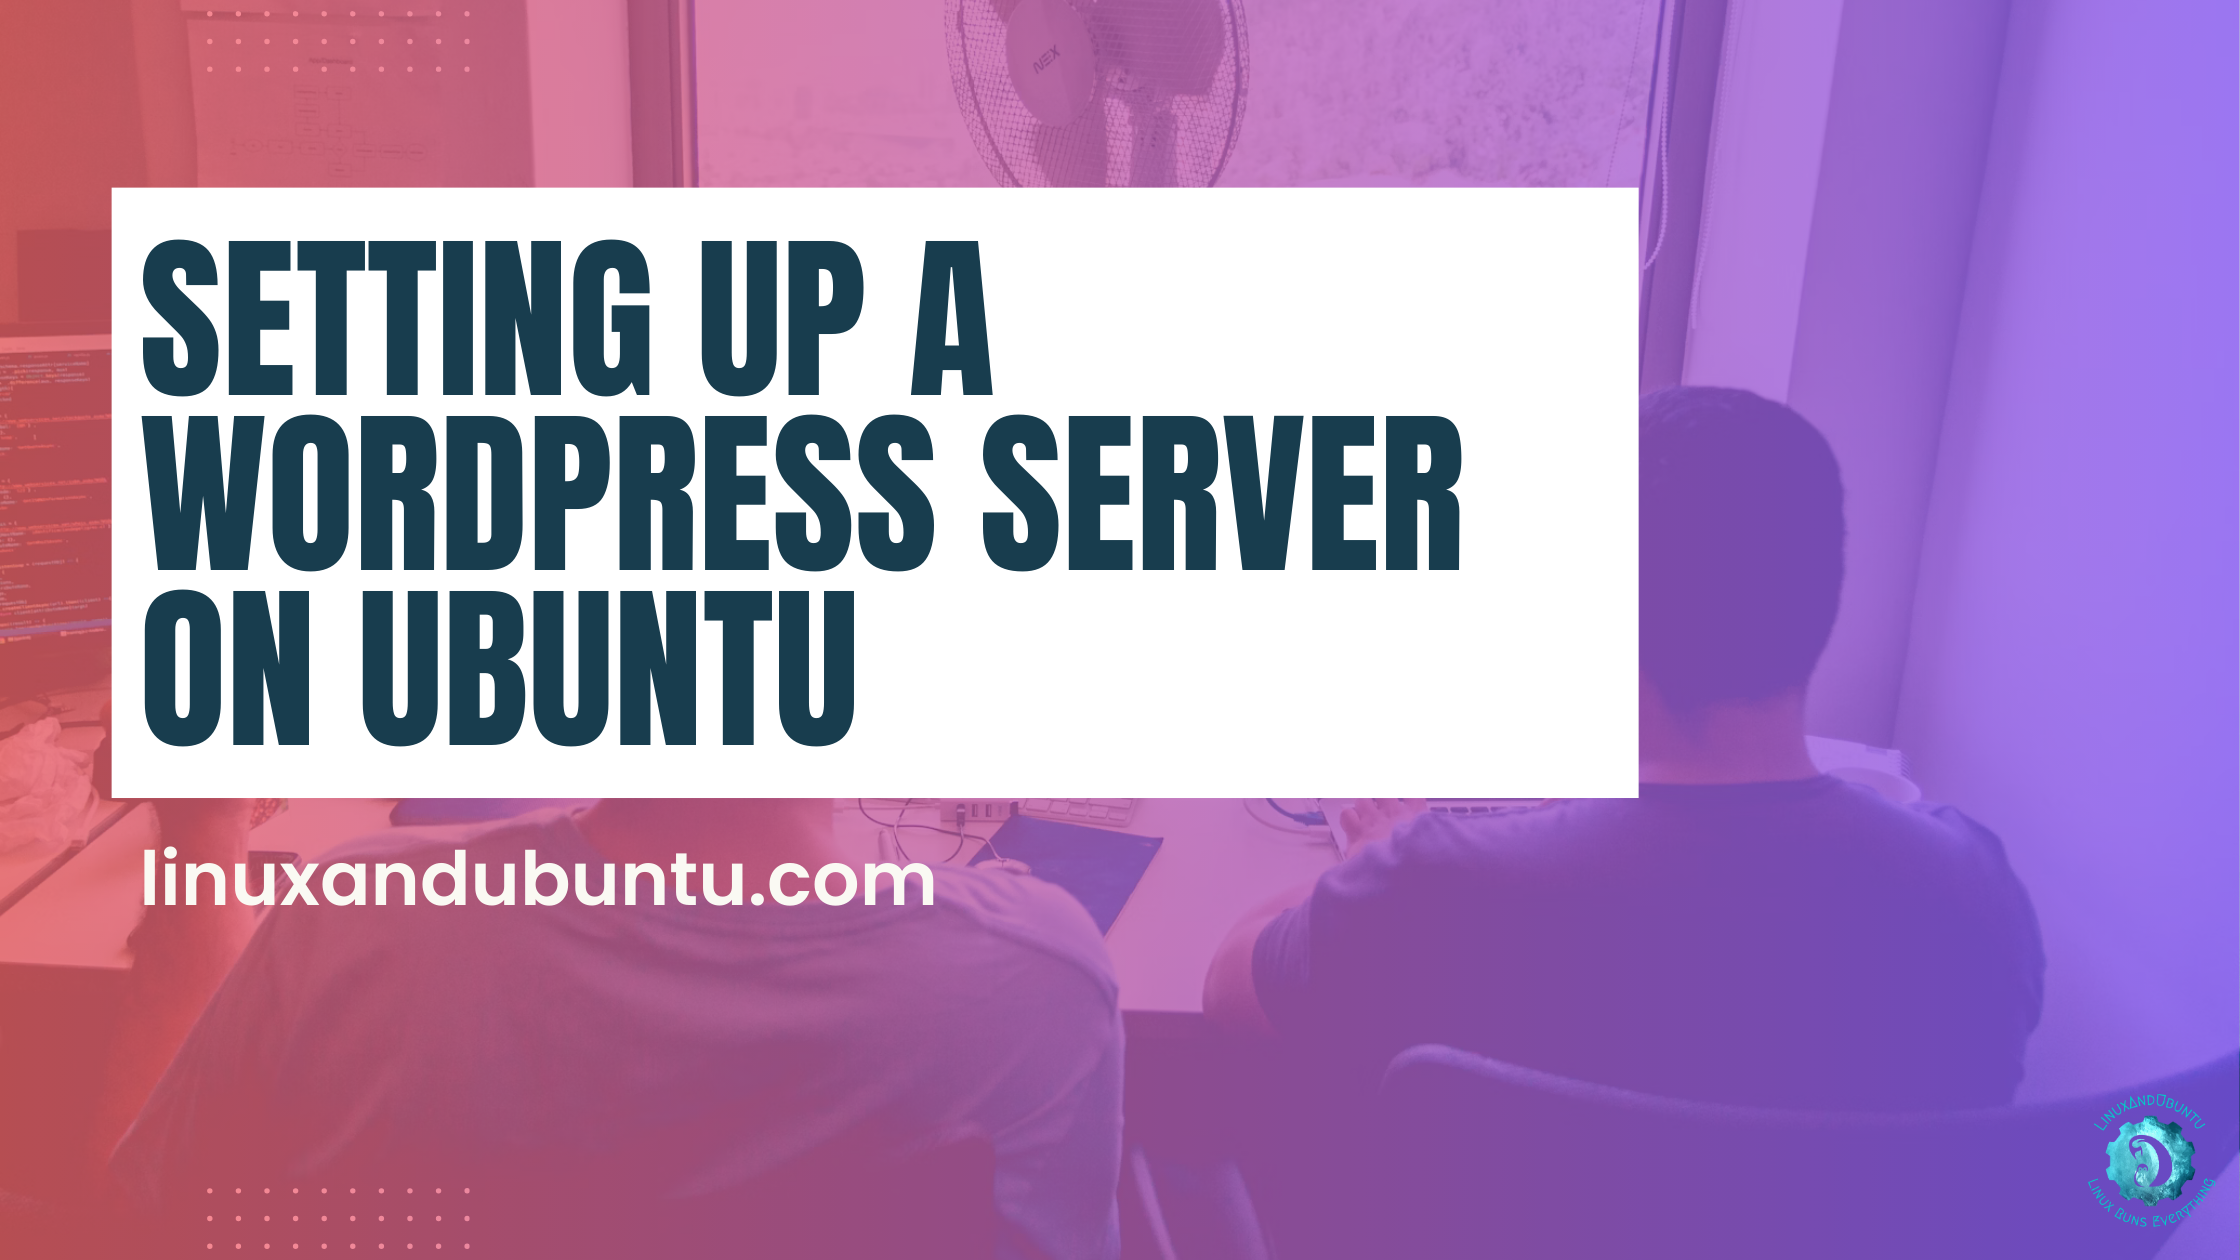 Linux and WordPress: Setting Up a WordPress Server on Ubuntu